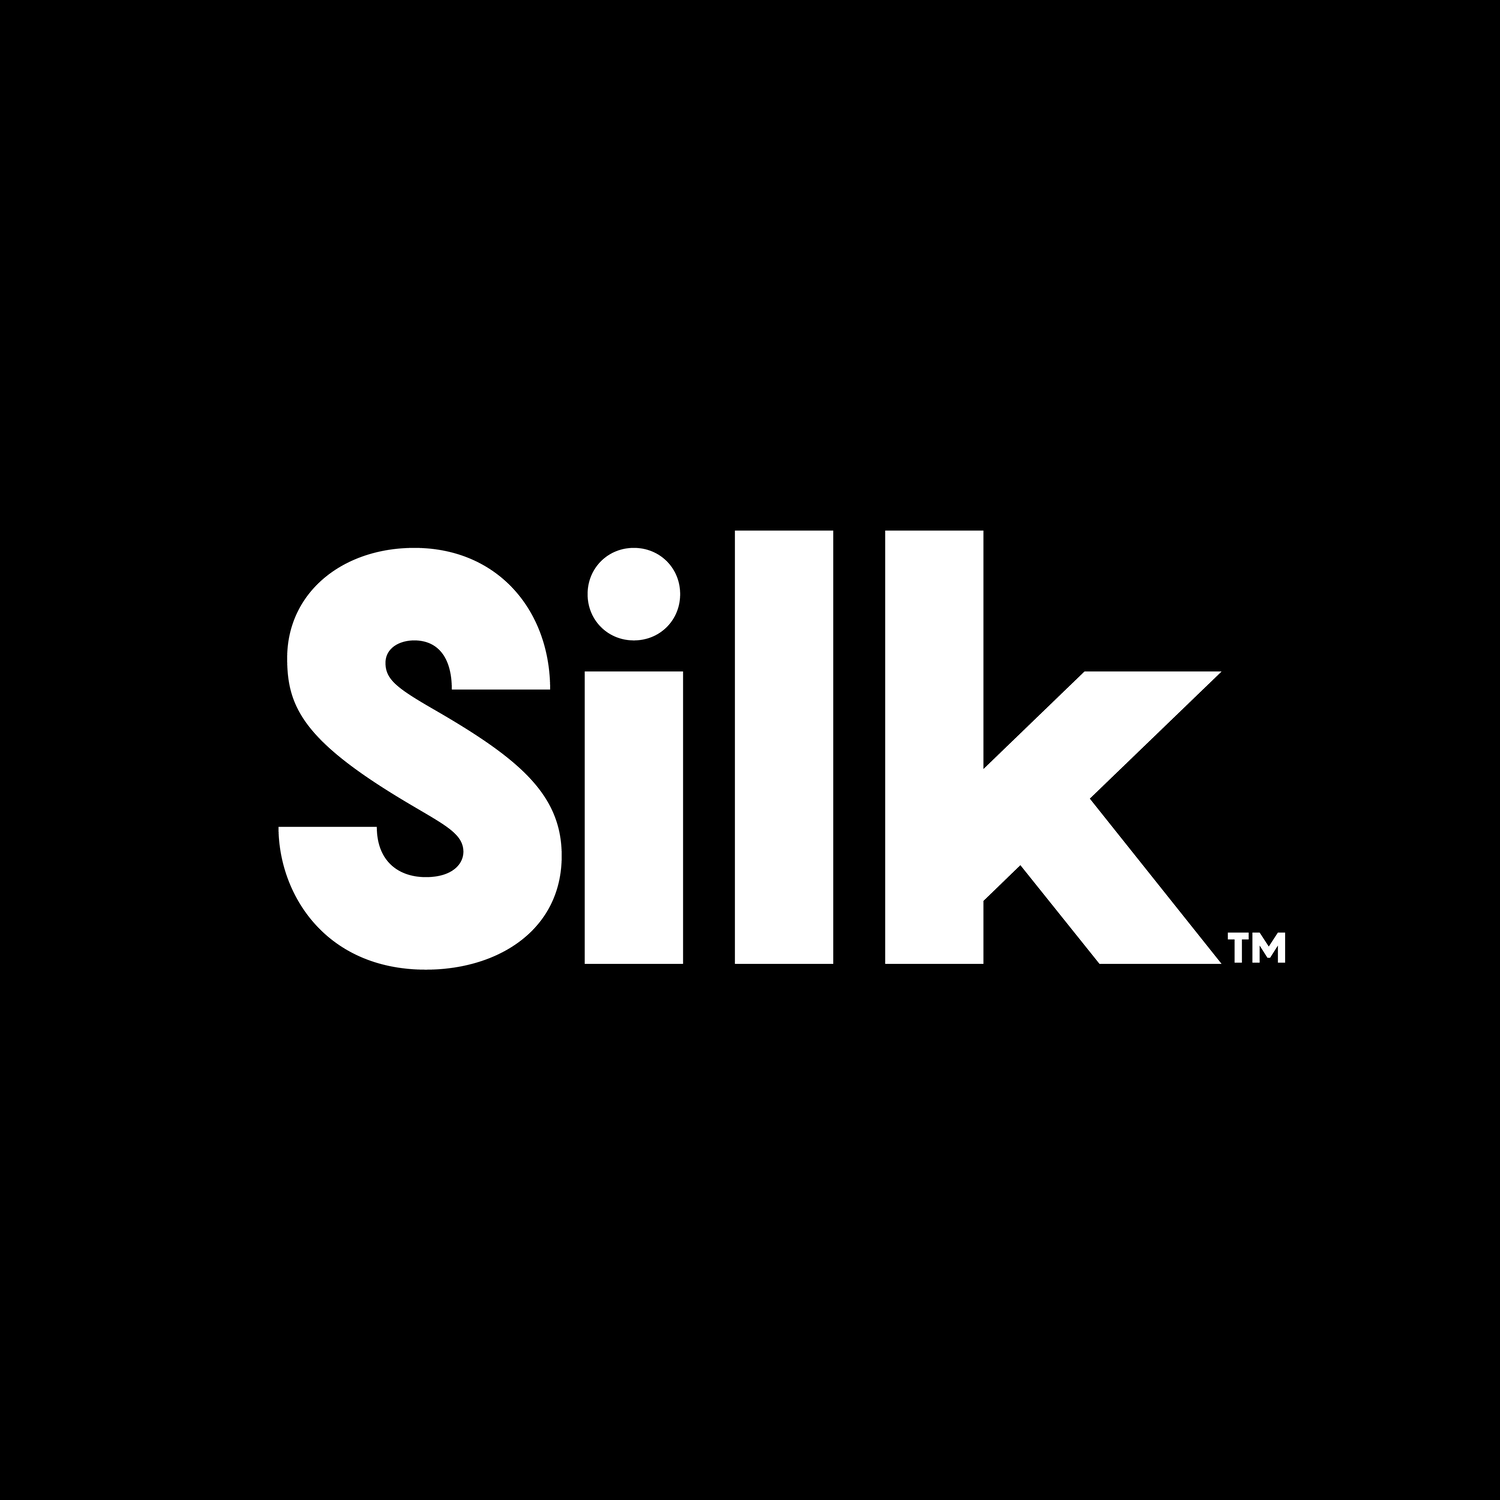 Silk Gallery